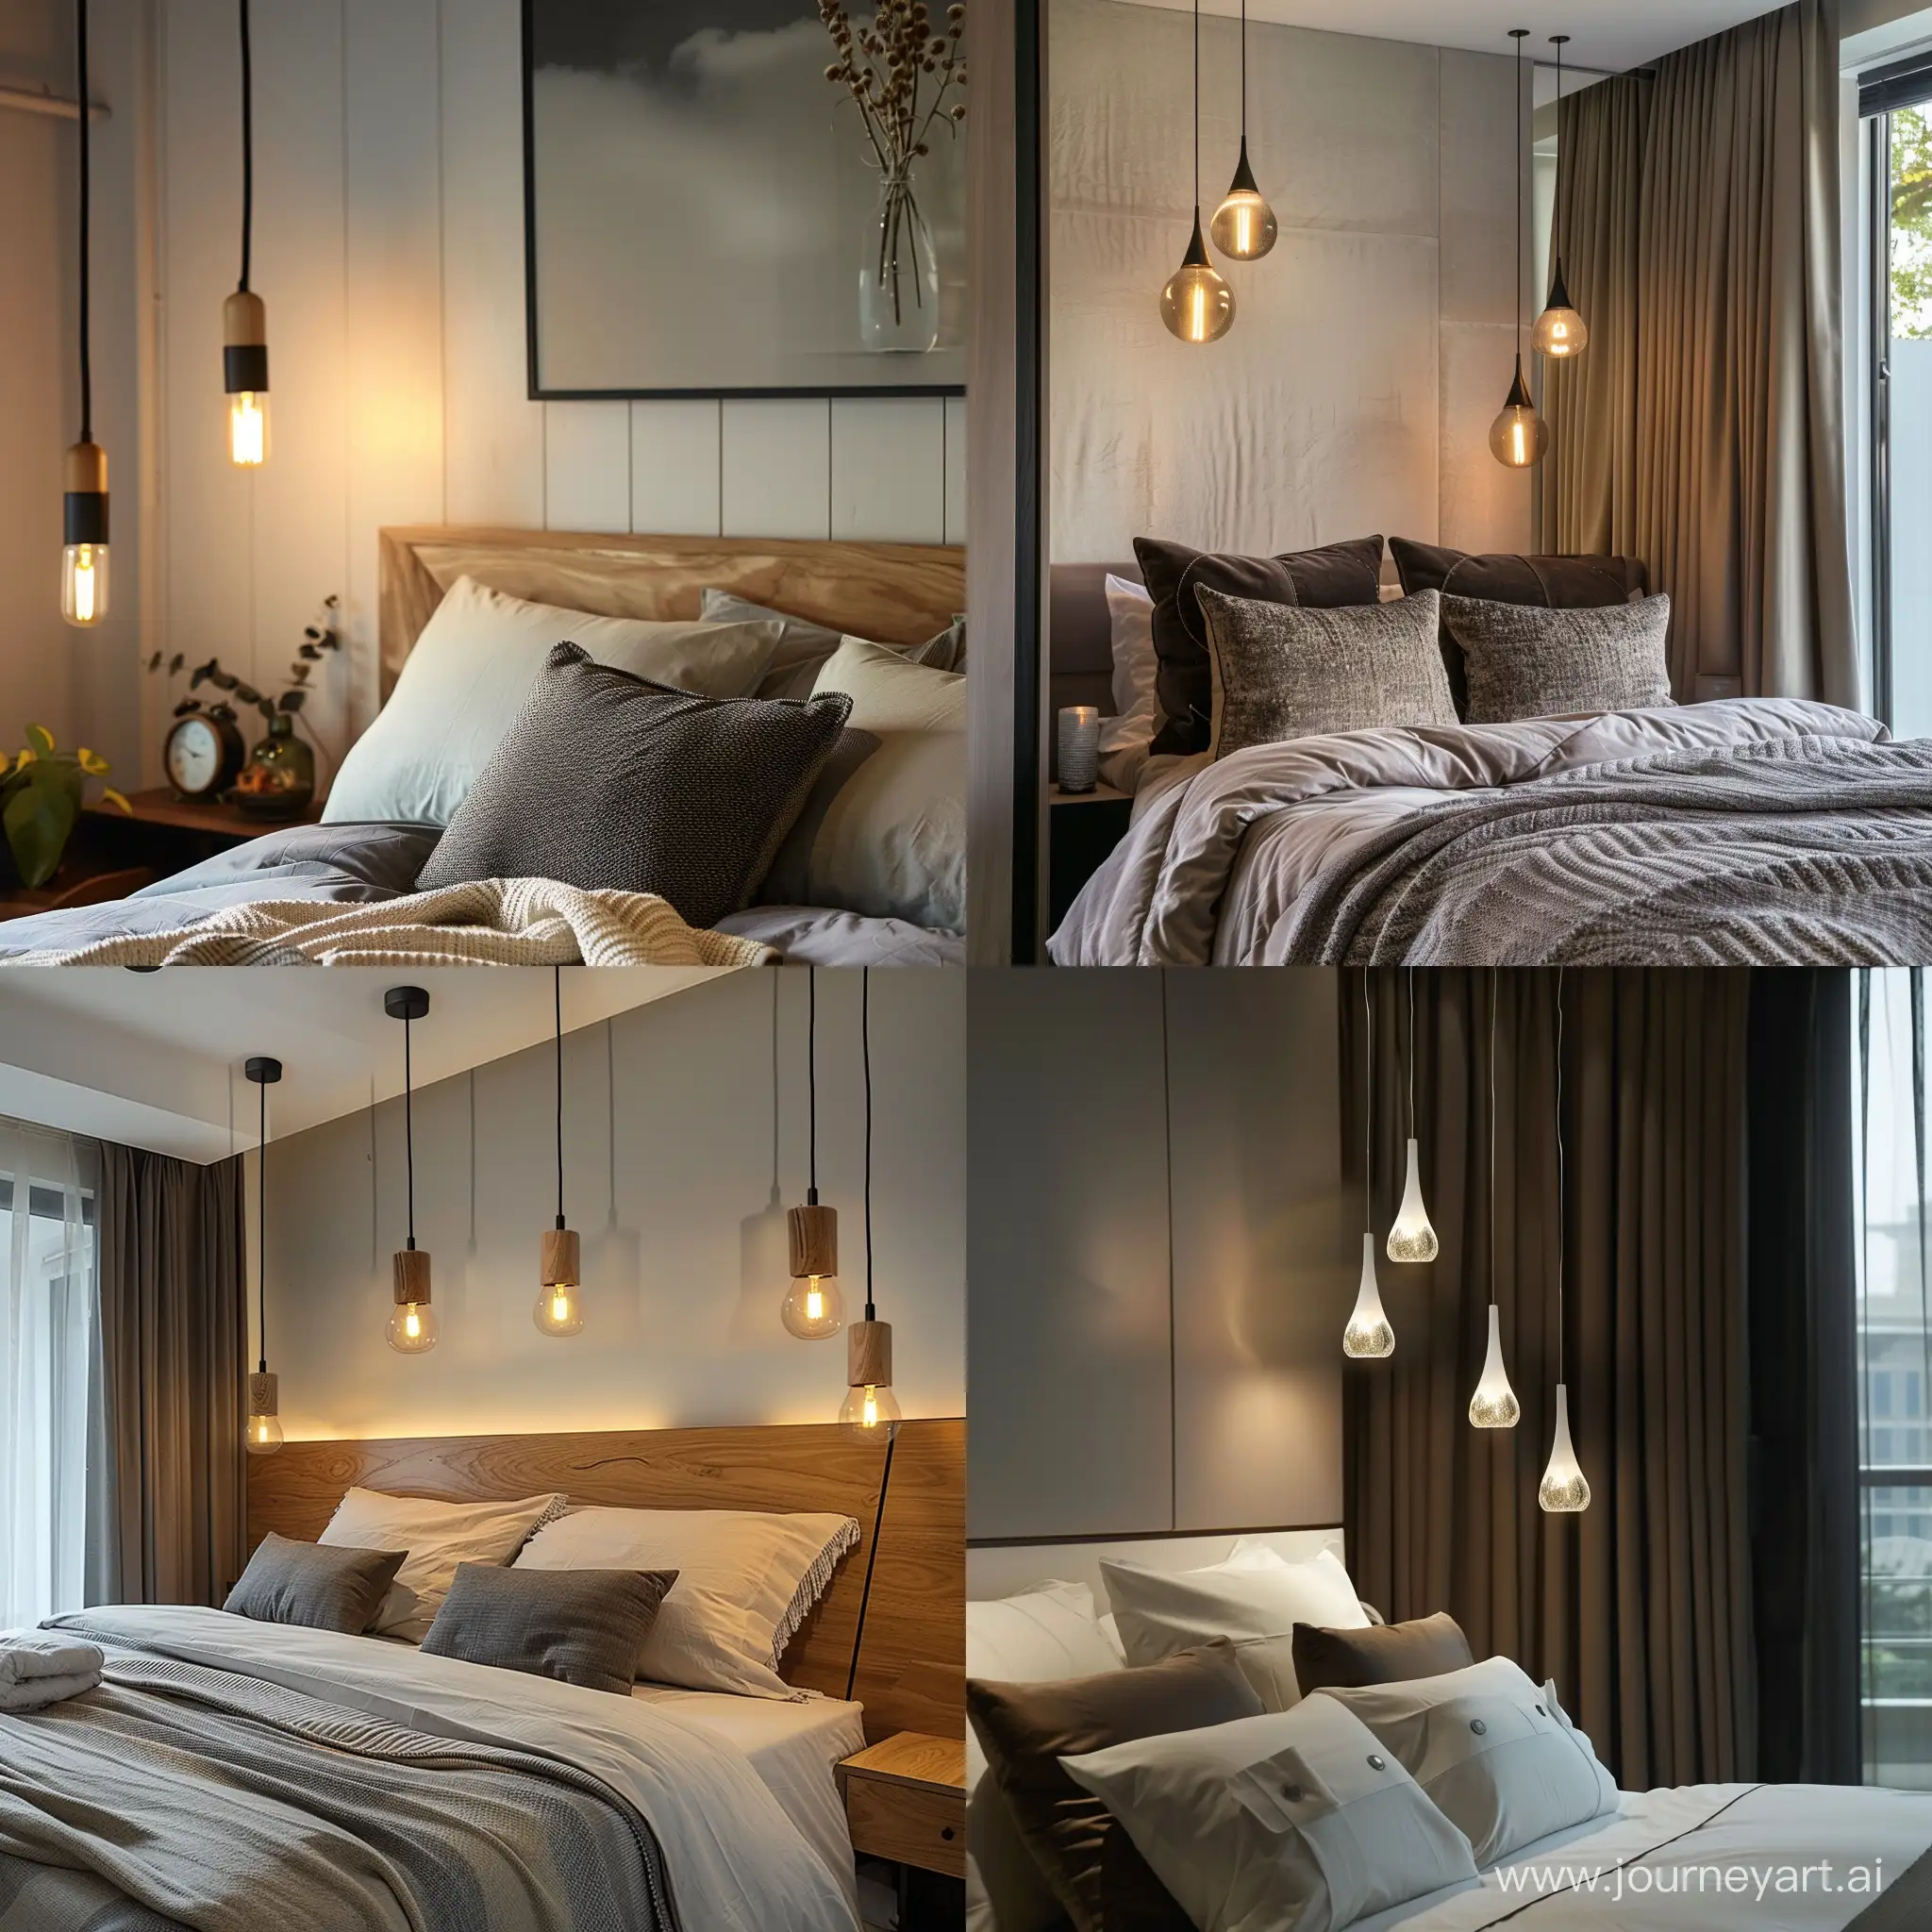 Elegant-Pendant-Lights-in-a-Bedroom-Setting